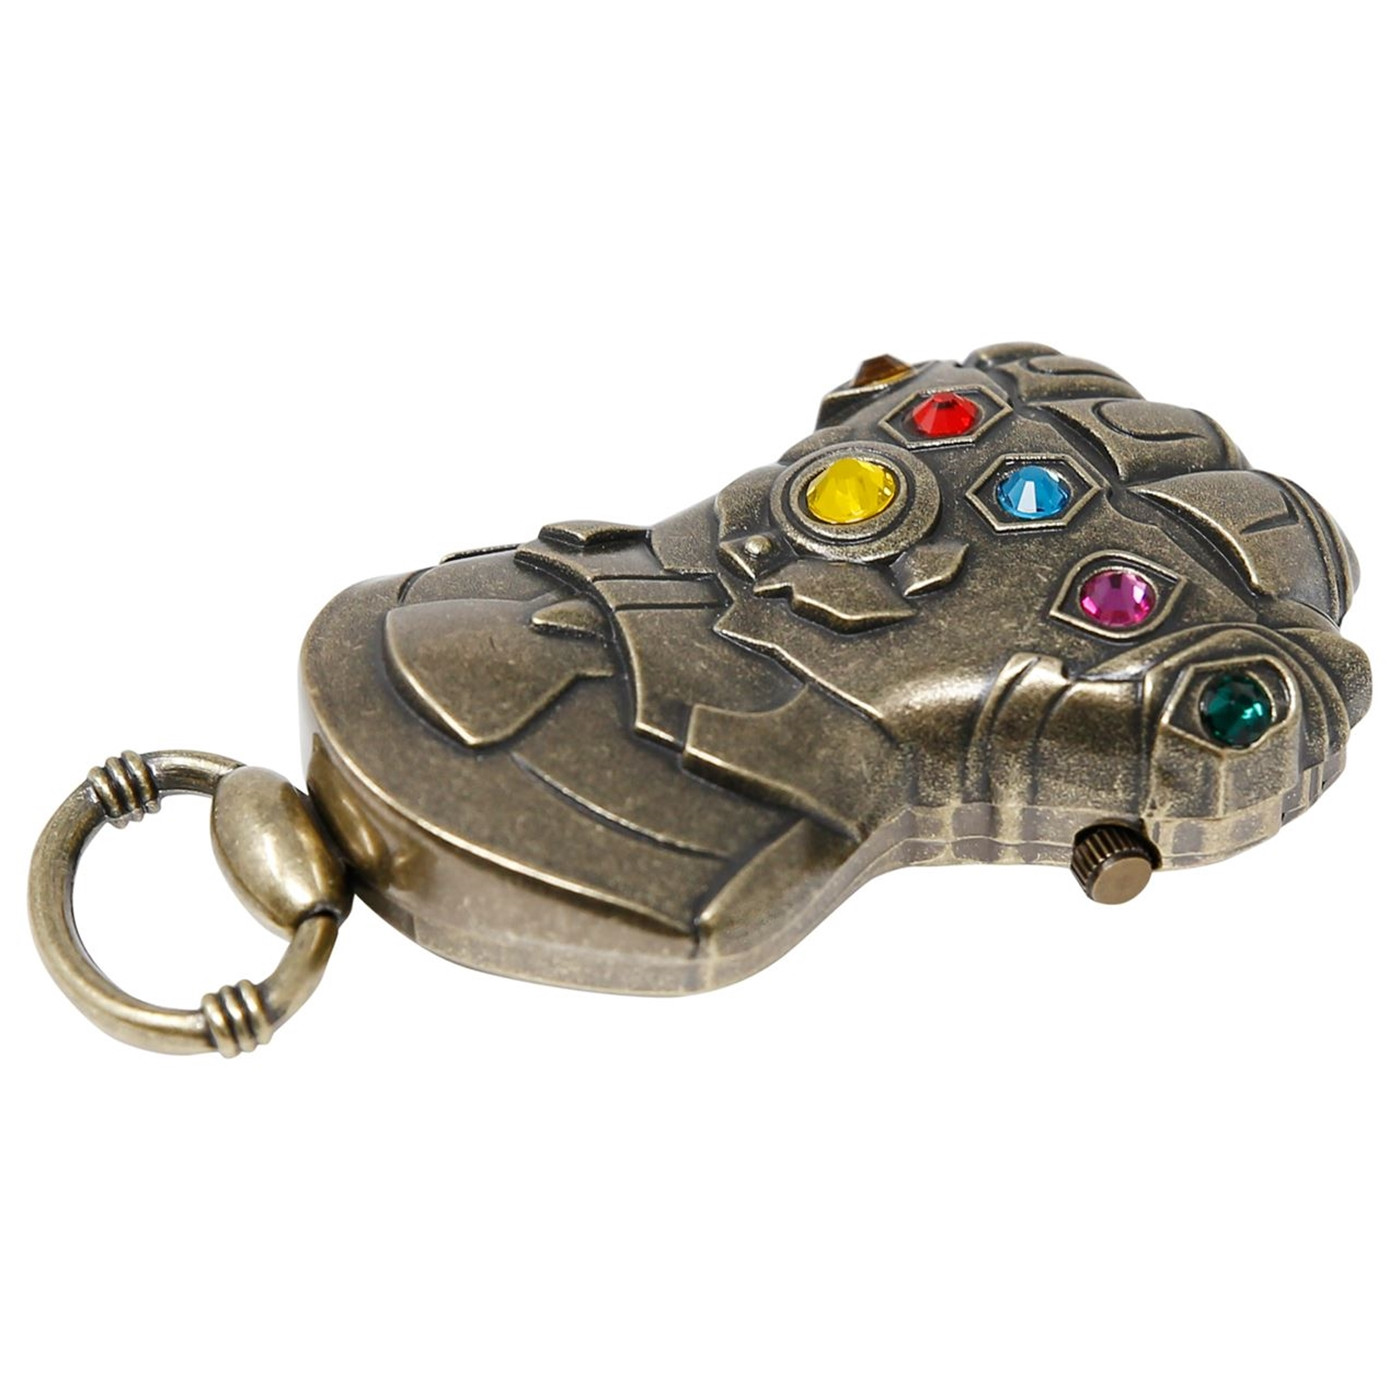 Avengers Endgame Movie Thanos Gauntlet Pocket Watch